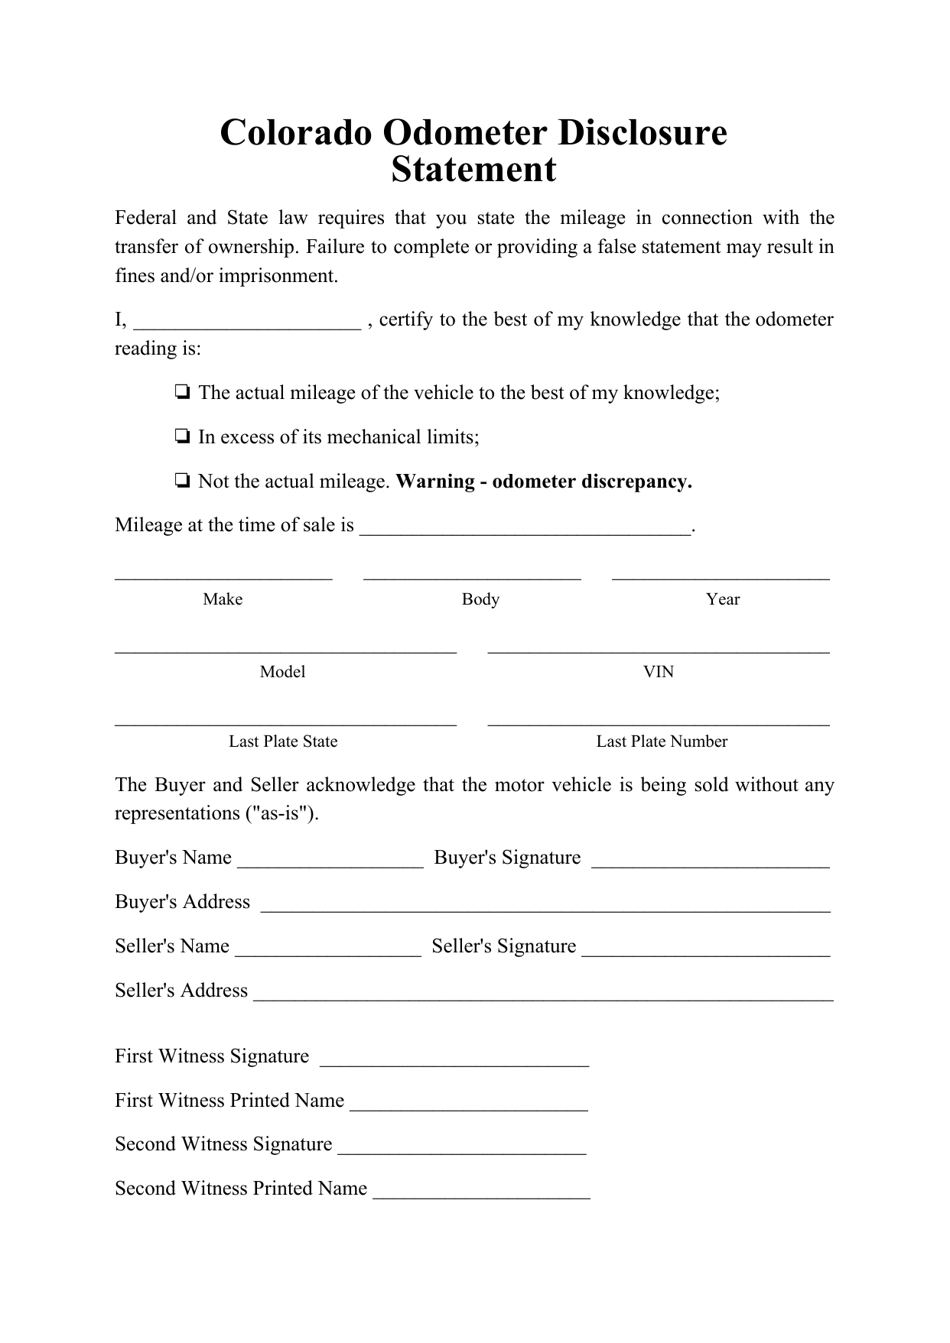 Odometer Disclosure Statement Form - Colorado, Page 1